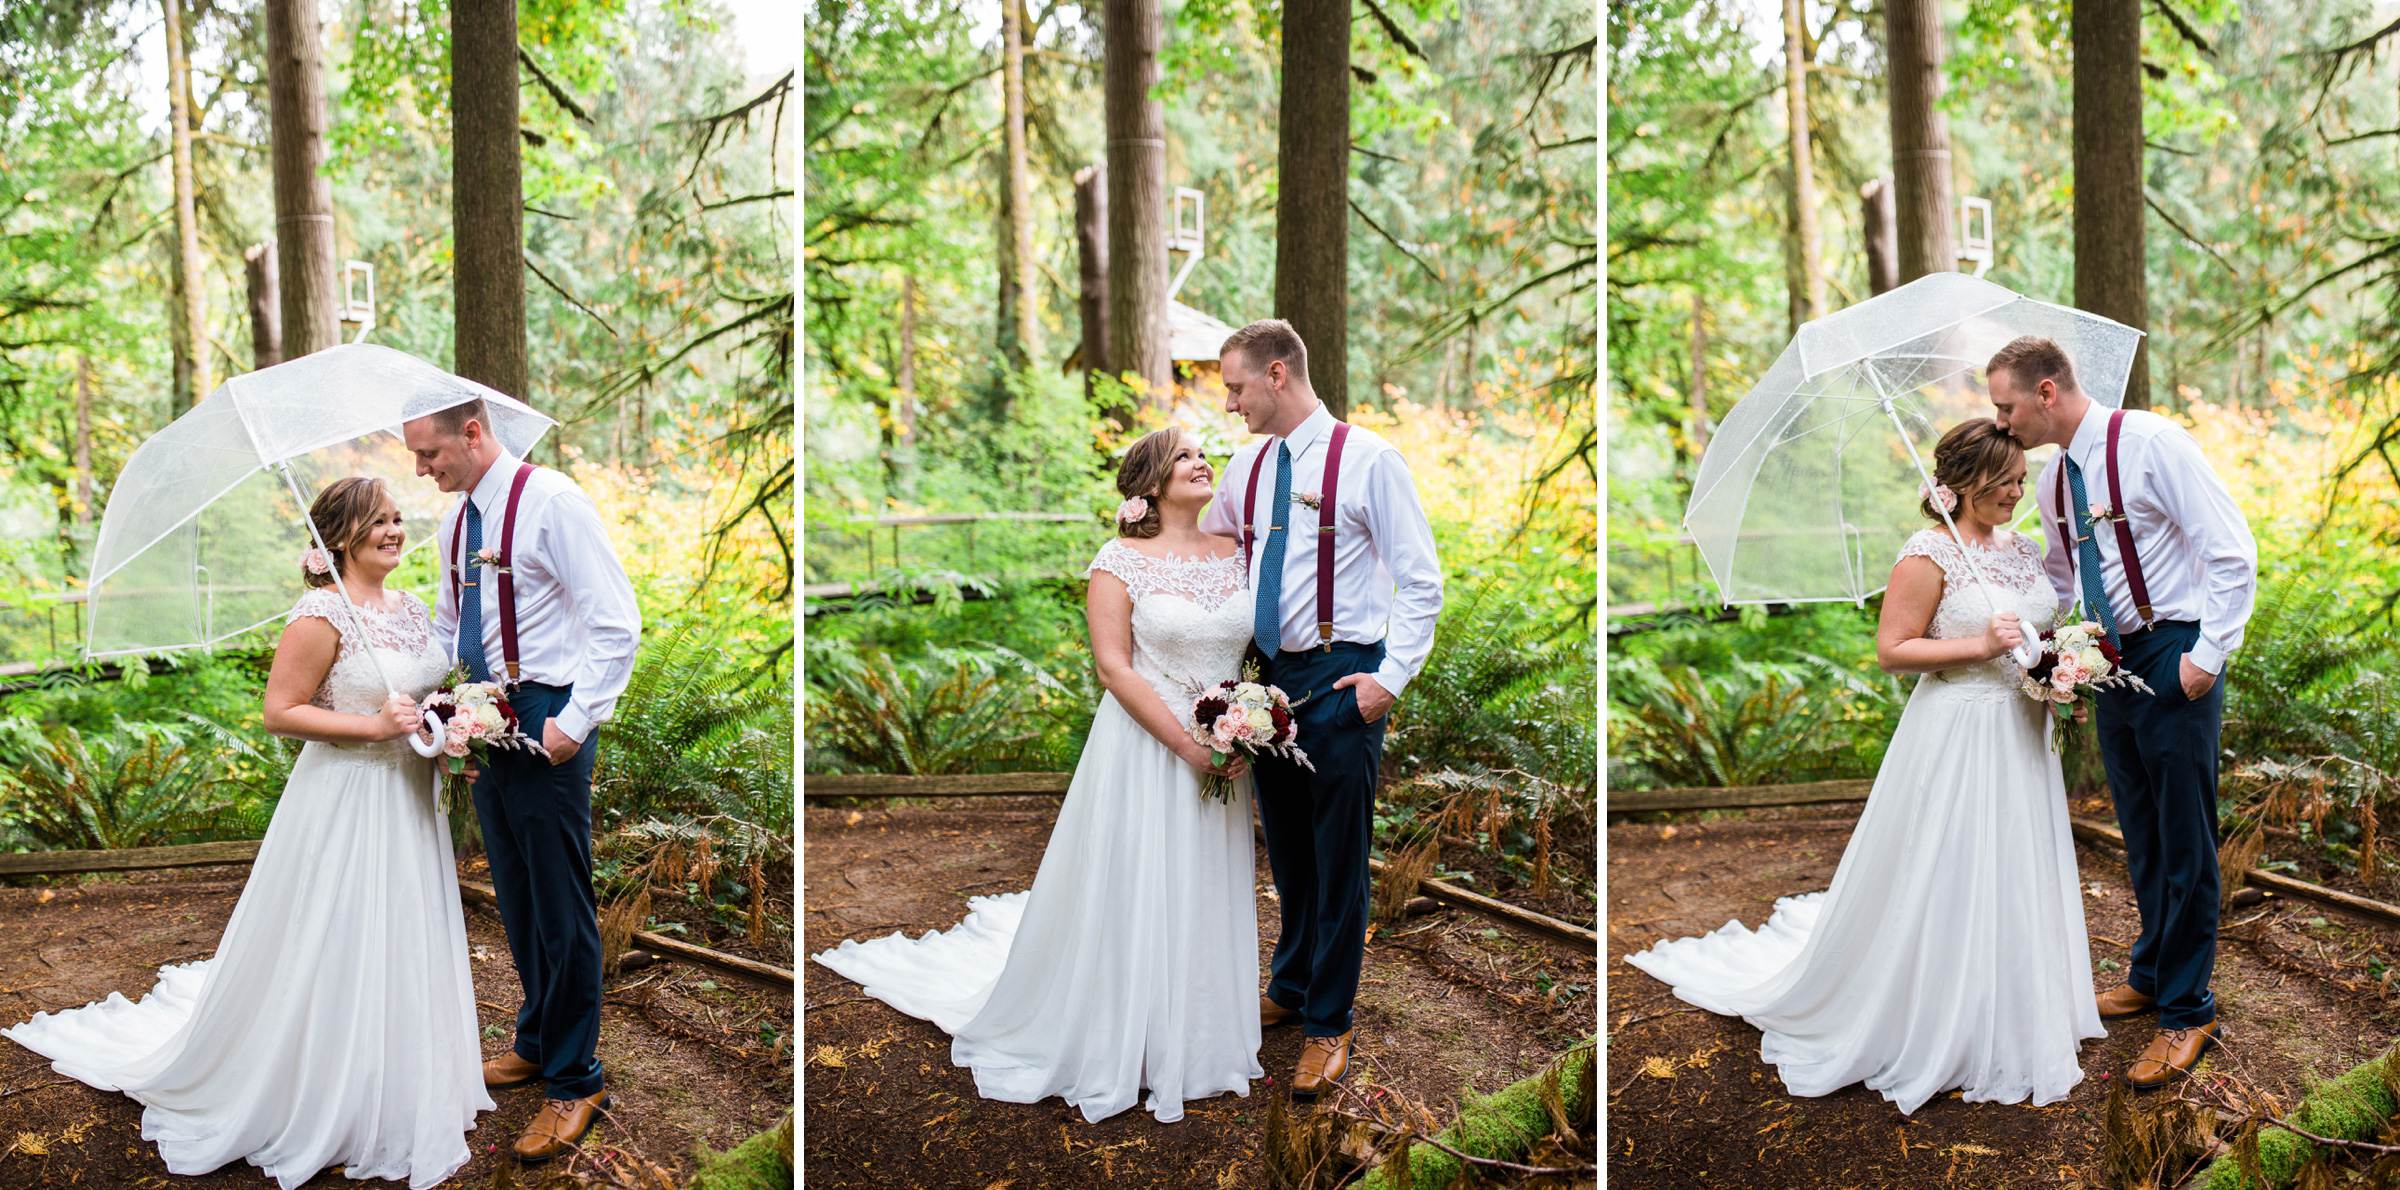 4-Rainy-First-Look-Umbrella-Seattle-Elopement-Photographer-Snoqualmie-TreeHouse-Point-Adventure-Wedding-Photography